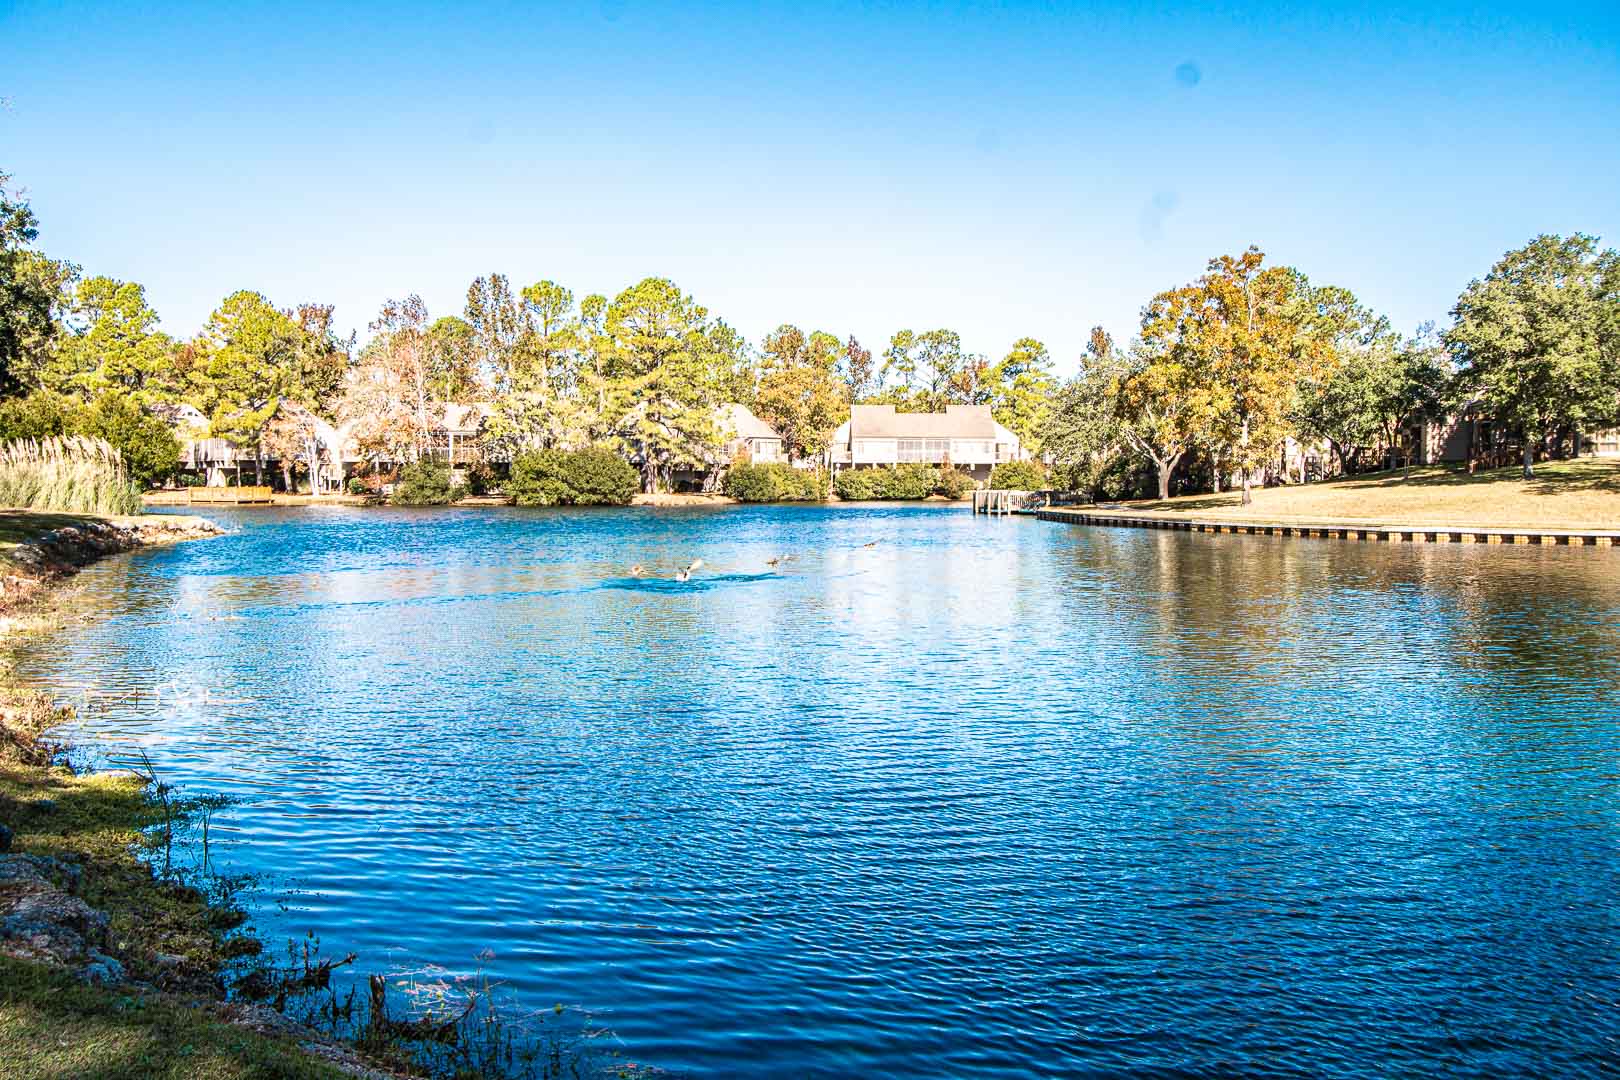 A peaceful lake view at VRI's Sandcastle Village in New Bern, North Carolina.